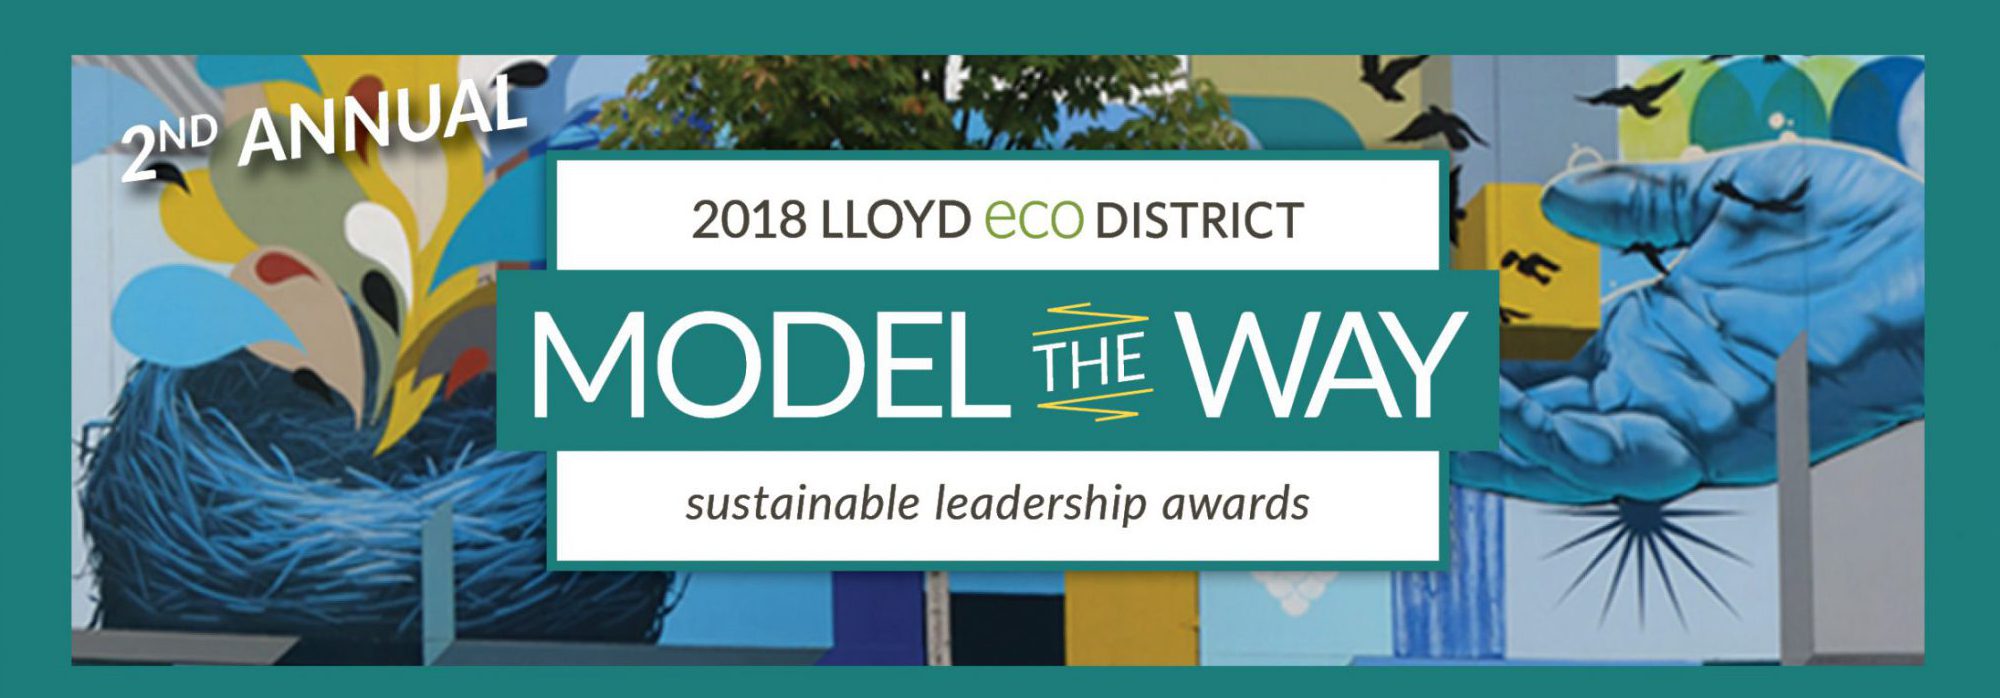 2018 Model the Way Sustainable Leadership Awards